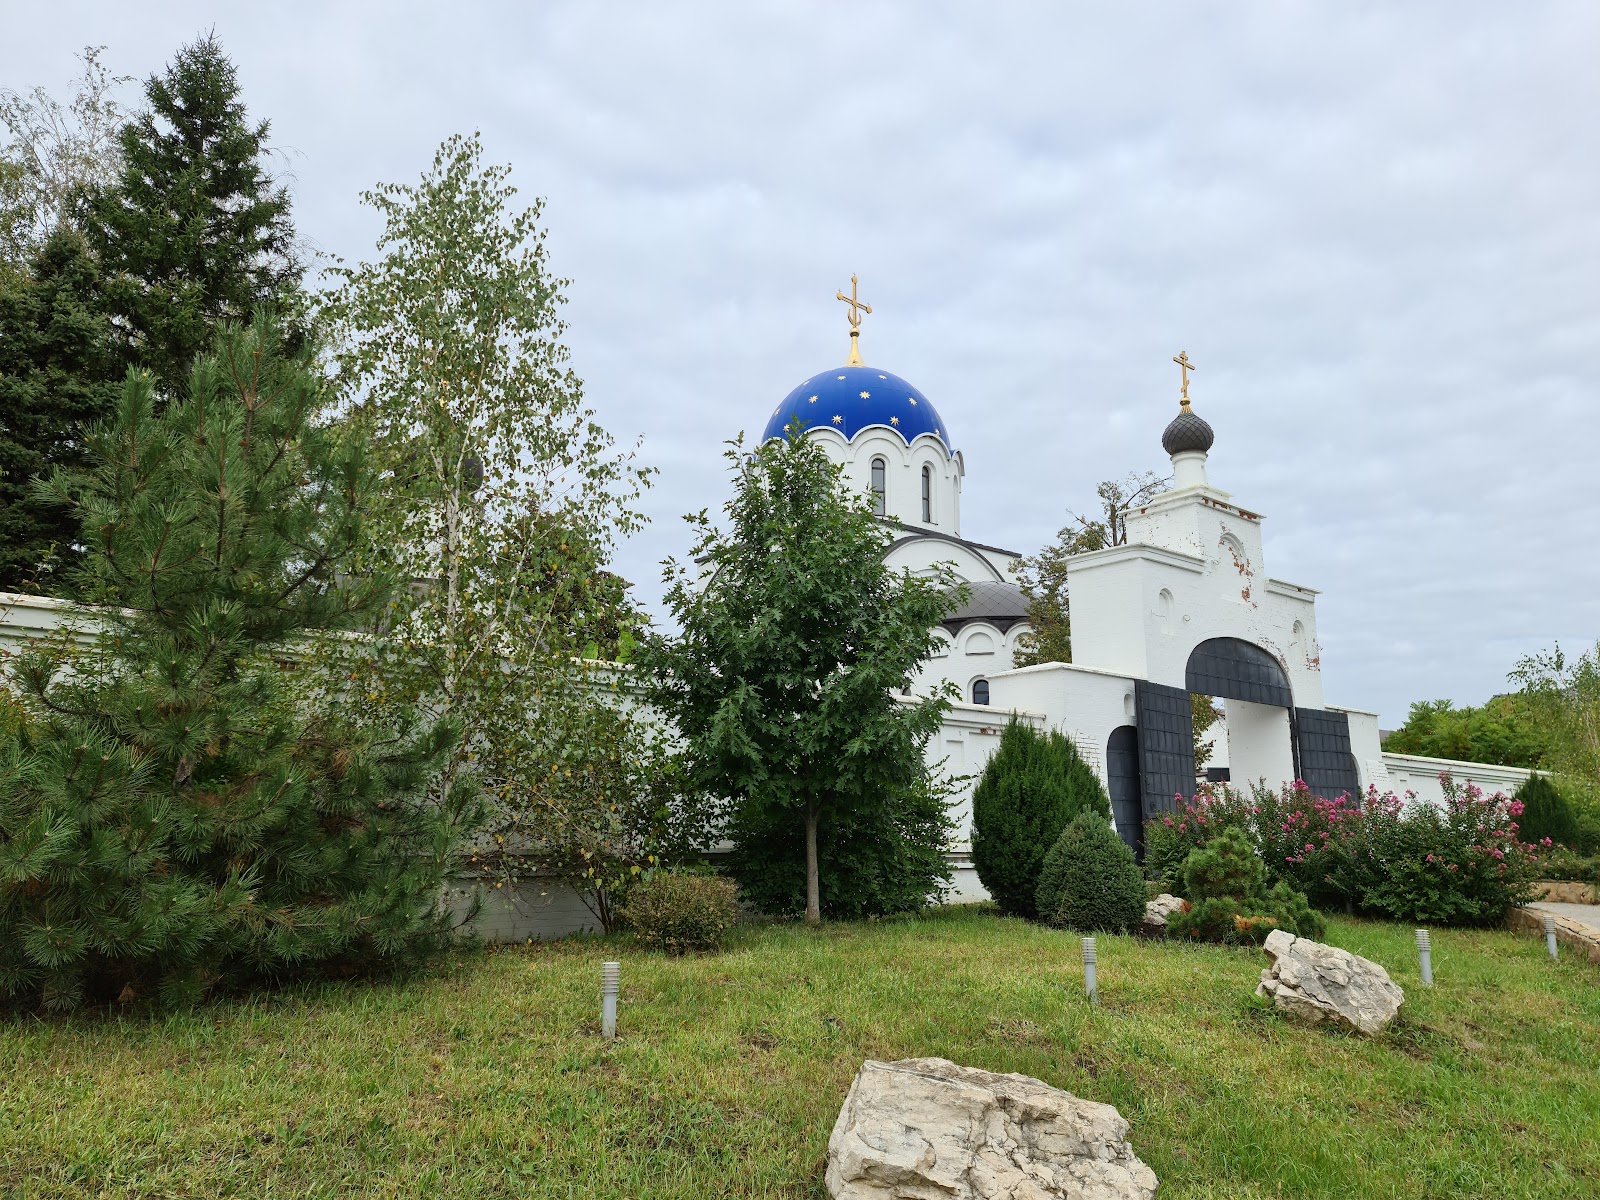 Convent of the Mother of God "Vsetsaritsa".